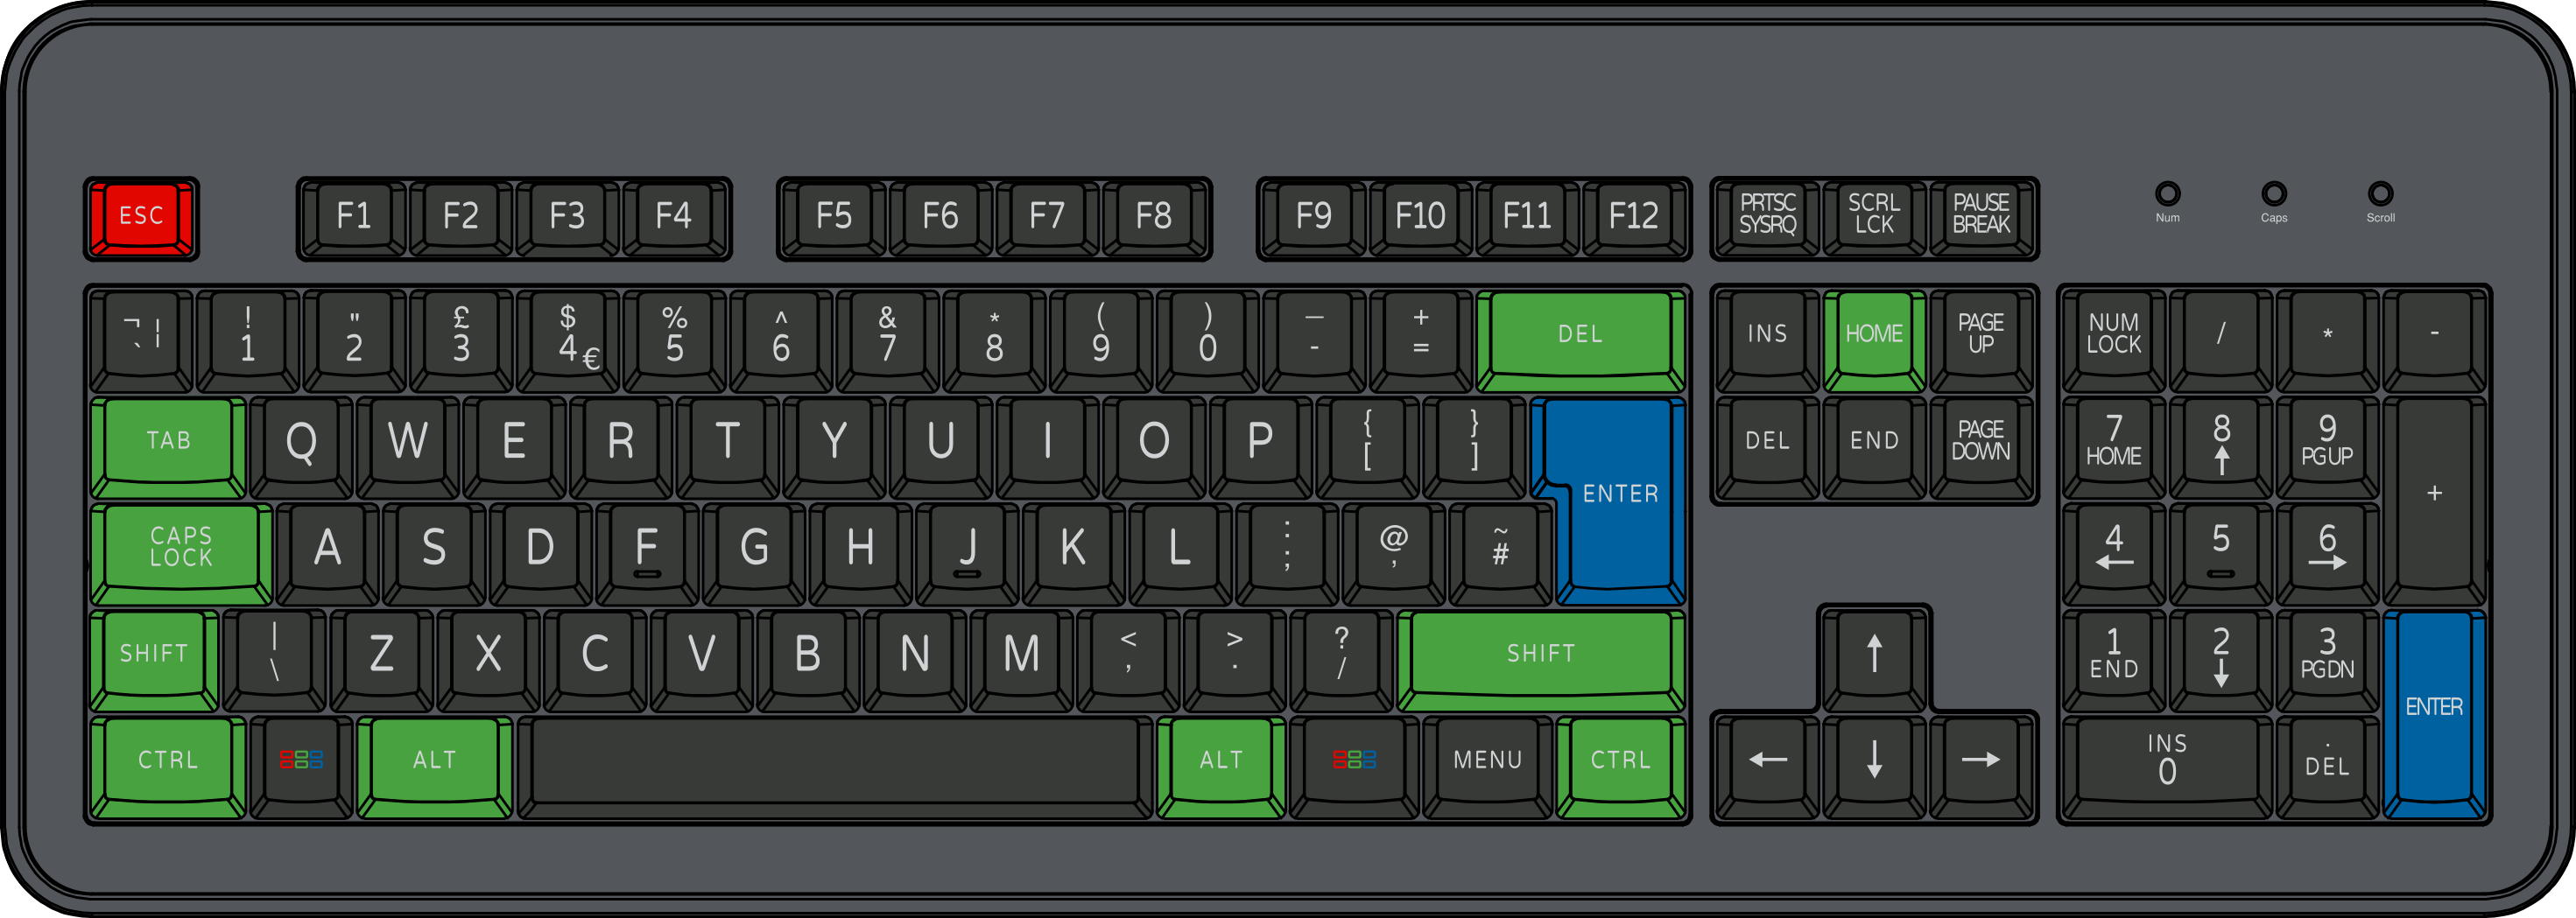 Simulant Input - Amstrad CPC464 inspired keyboard.png